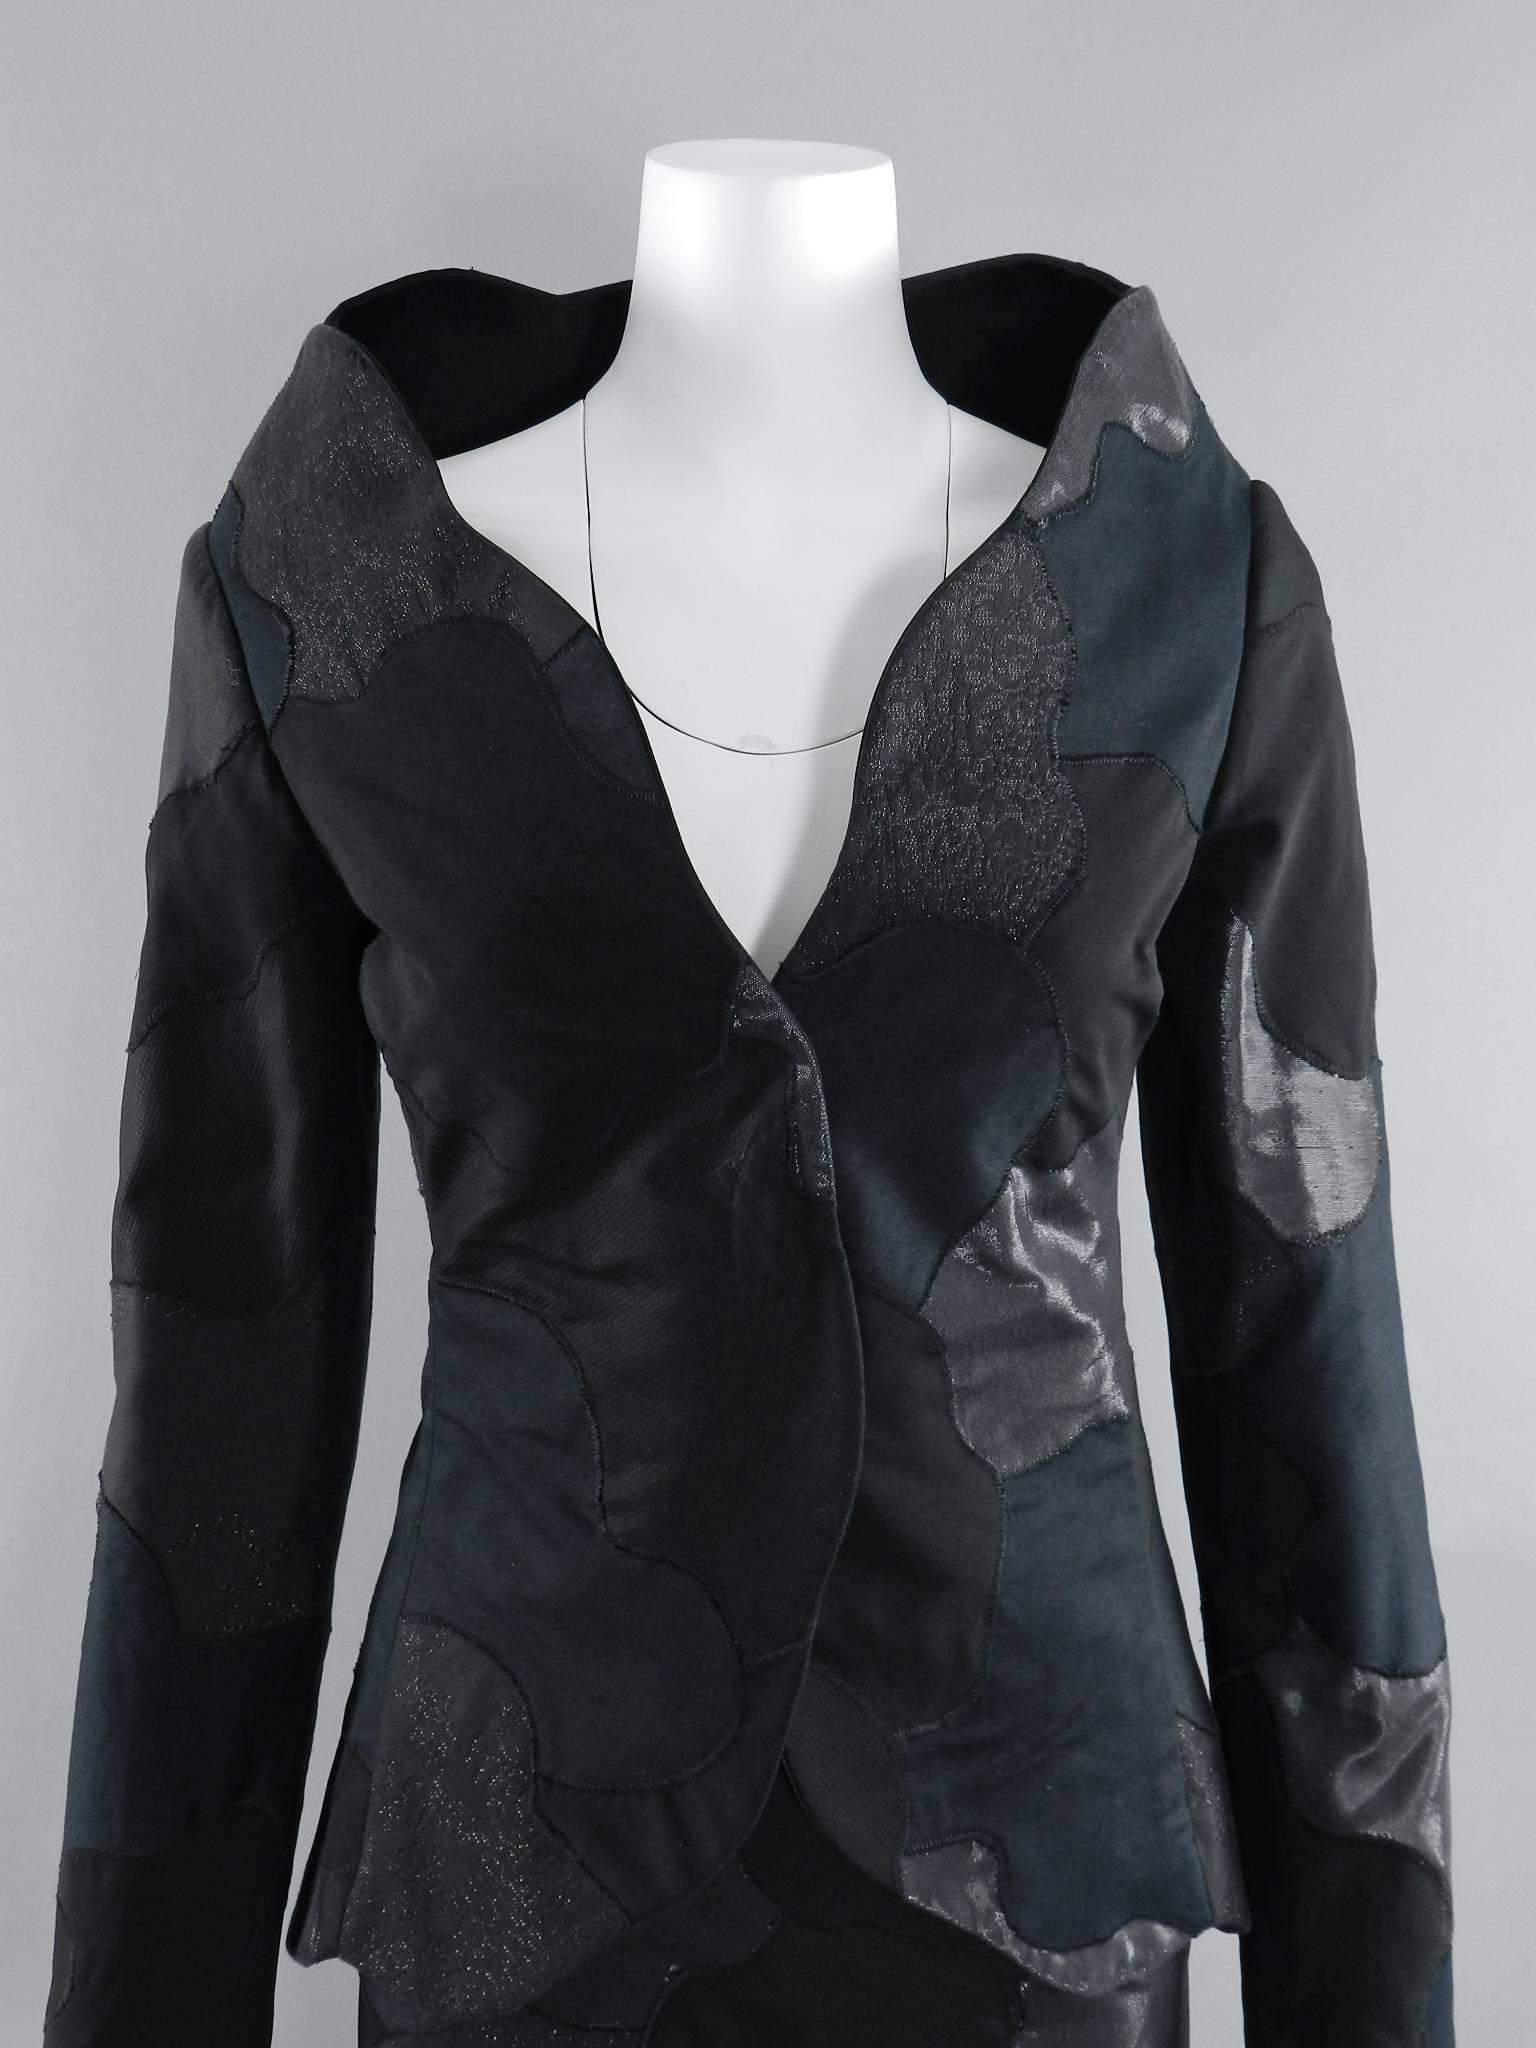 Alexander McQueen 2004 Black Patchwork Skirt Suit - Stand up Collar 1